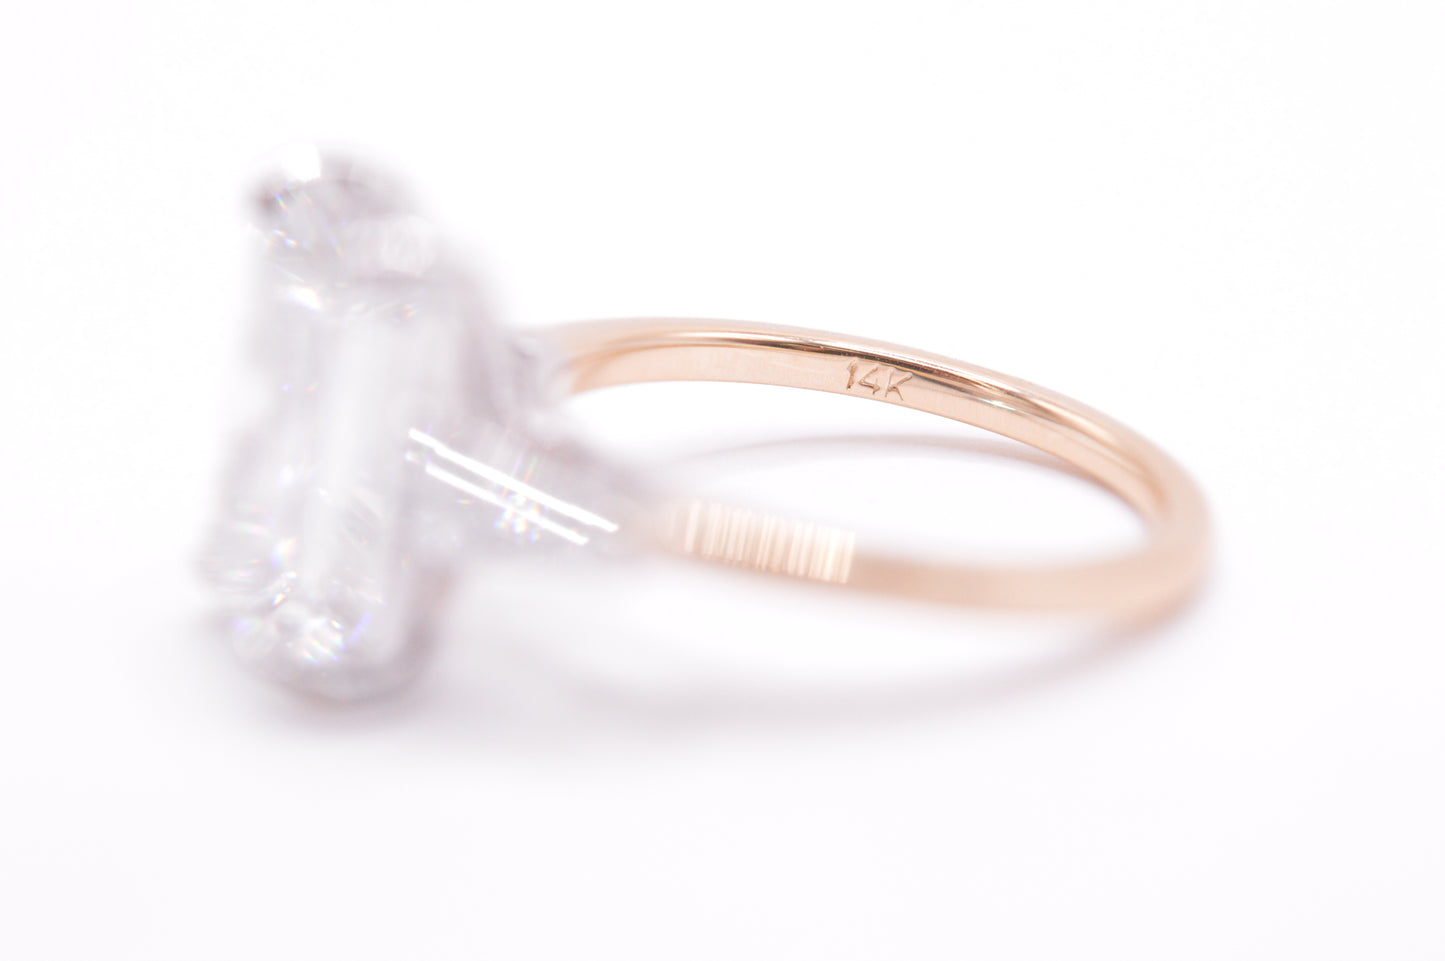 Made To Order-4ct Emerald Lab Diamond Engagement Ring 14K Yellow Gold Lab Grown Diamond